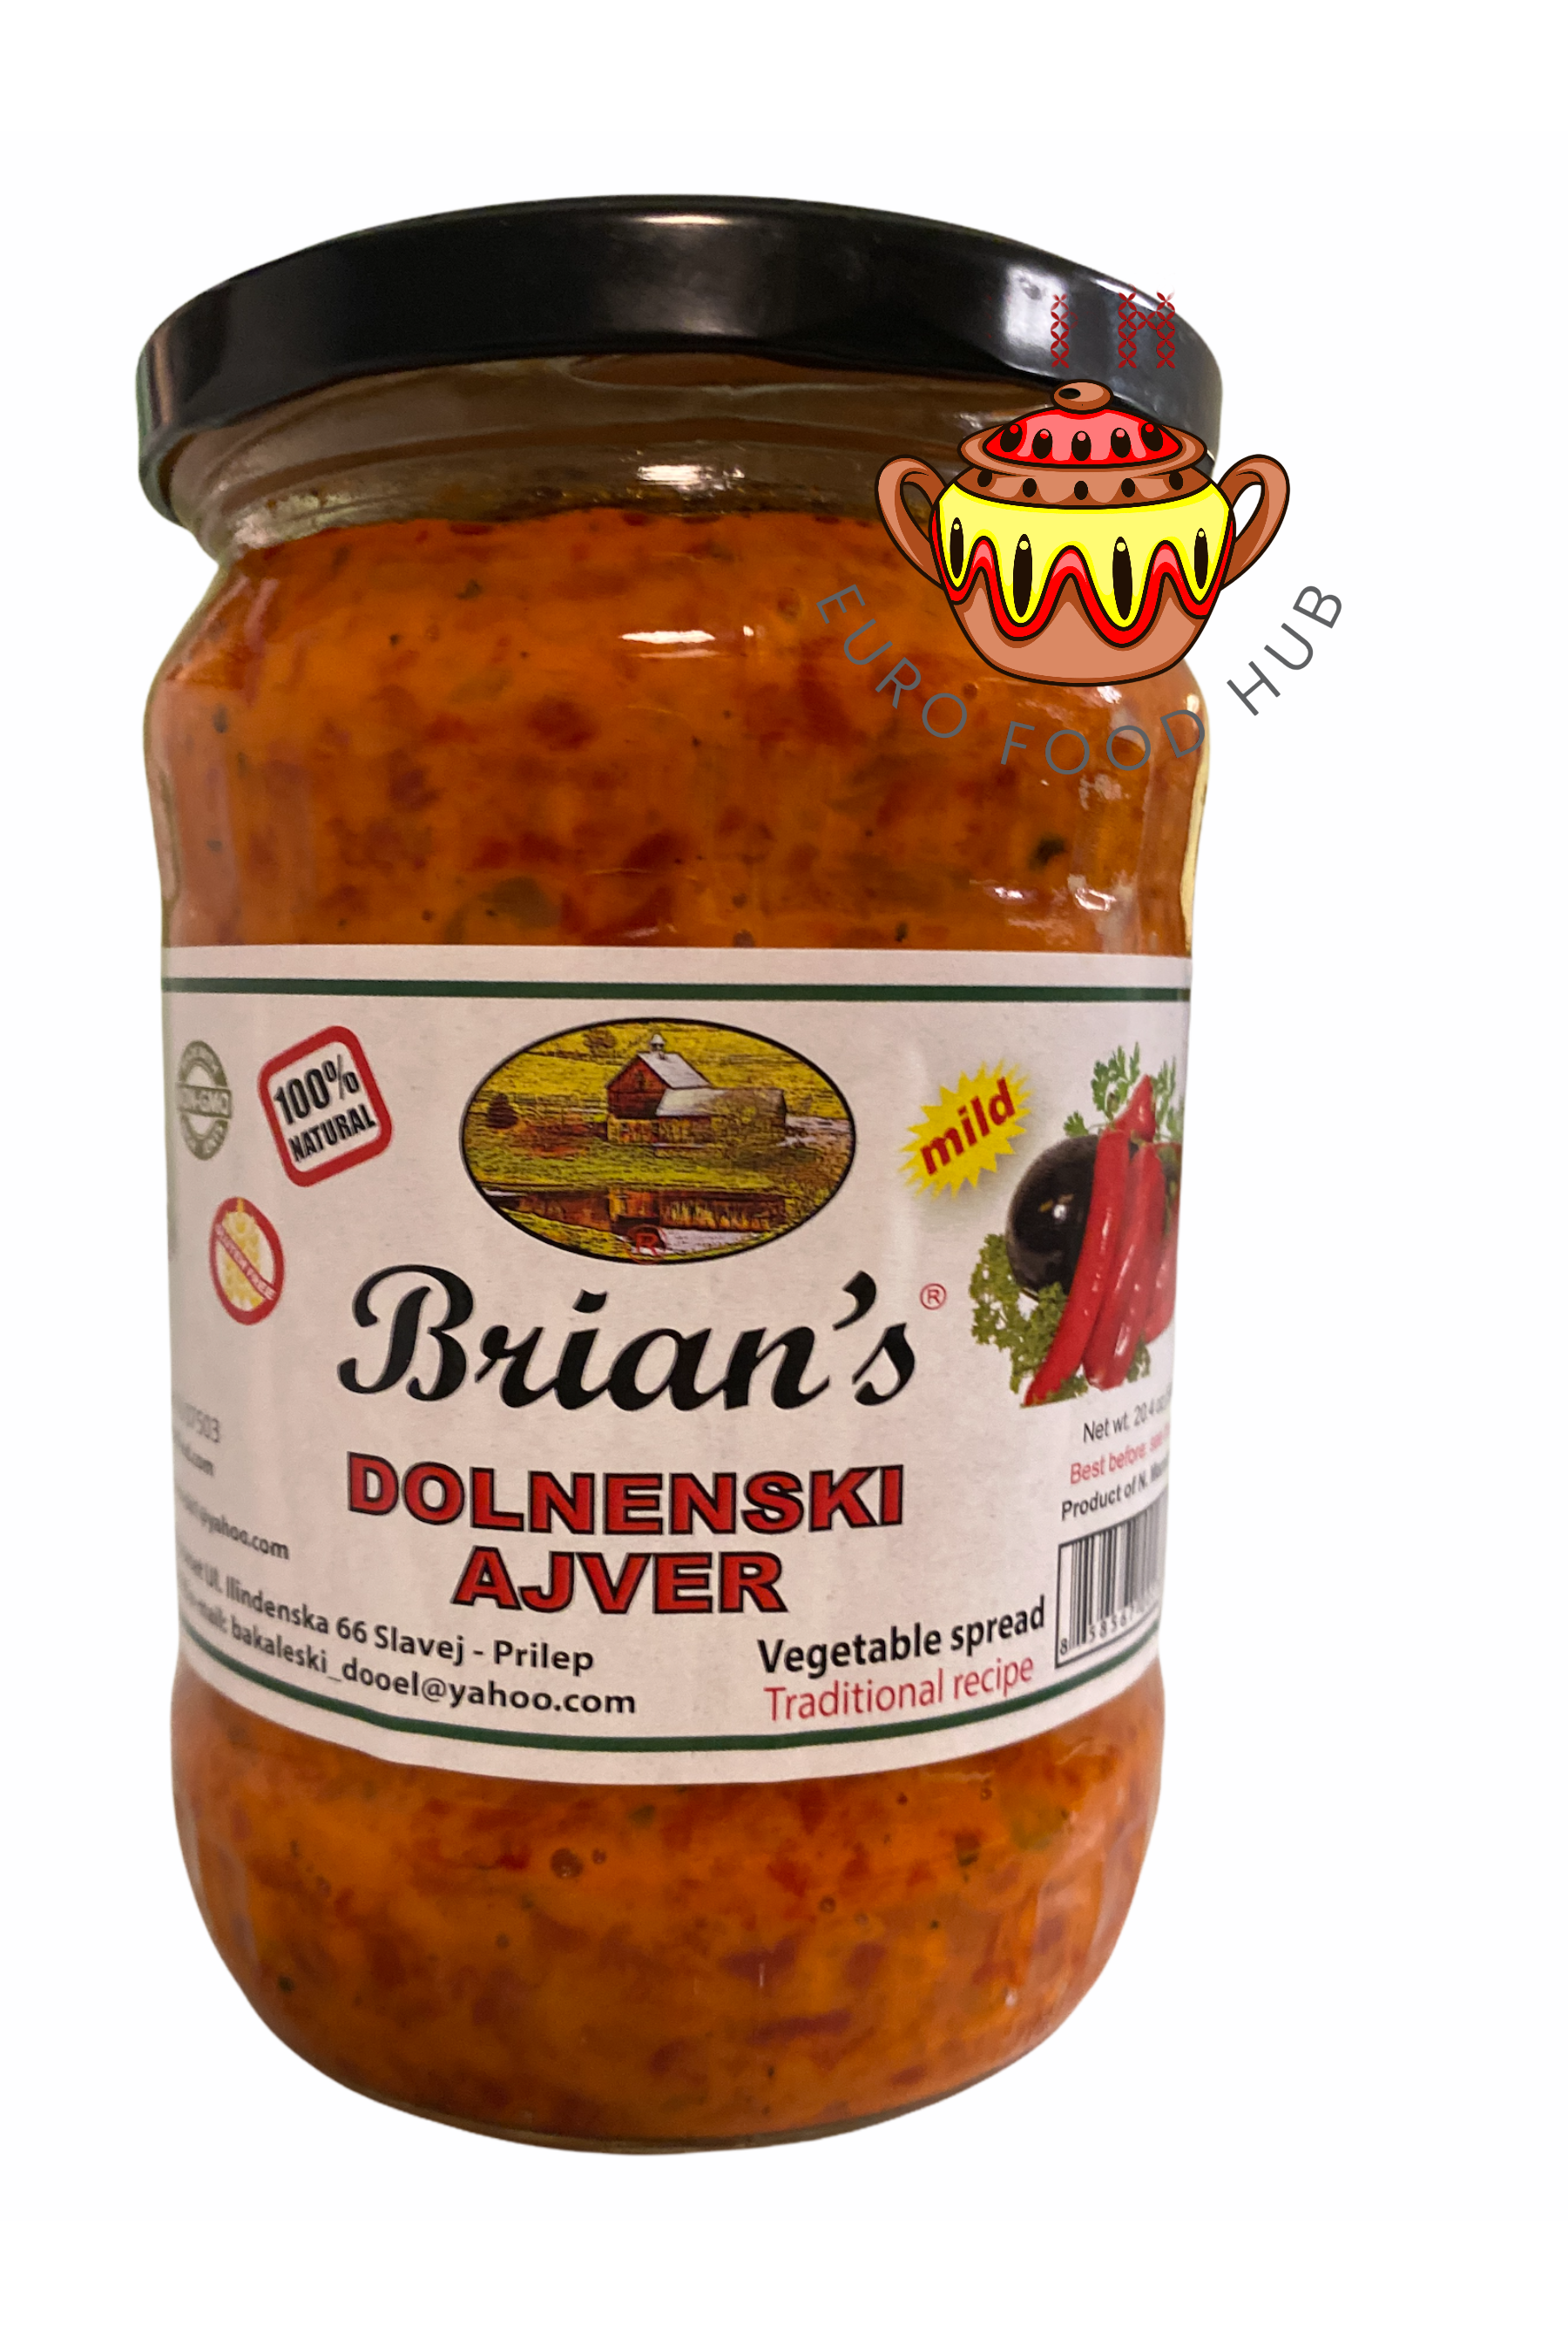 Brian's European Natural Products - DOLNENSKI Ajver (Ajvar) - Hot or Mild